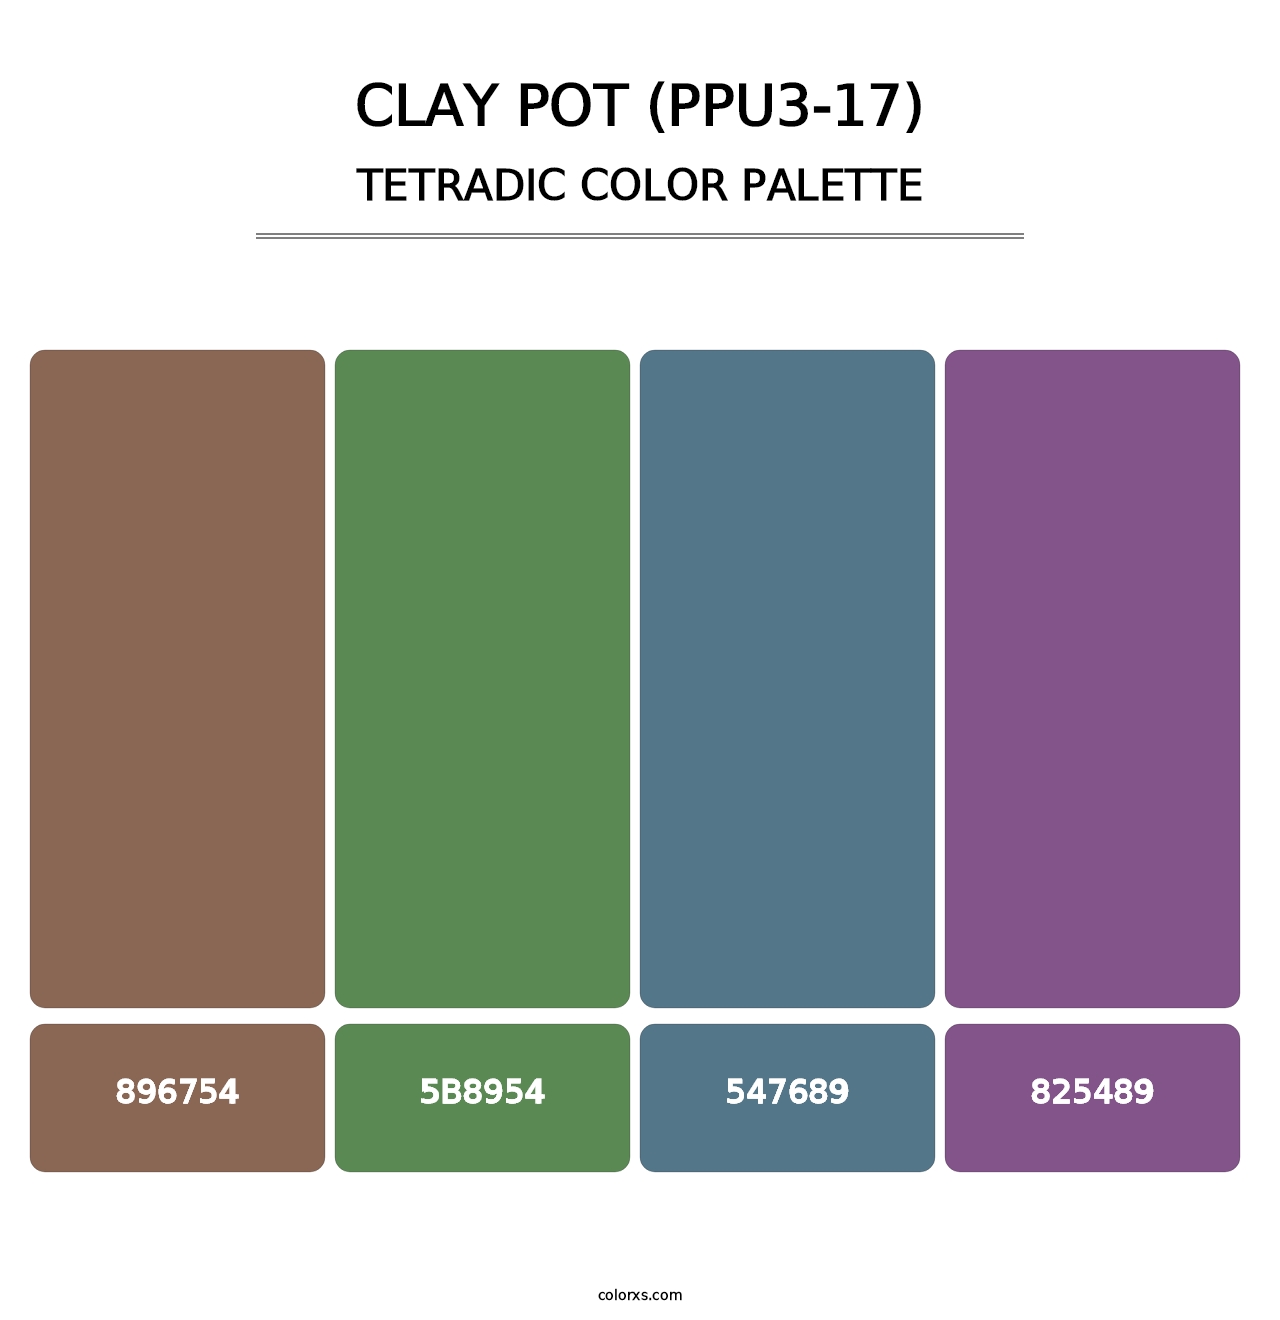 Clay Pot (PPU3-17) - Tetradic Color Palette